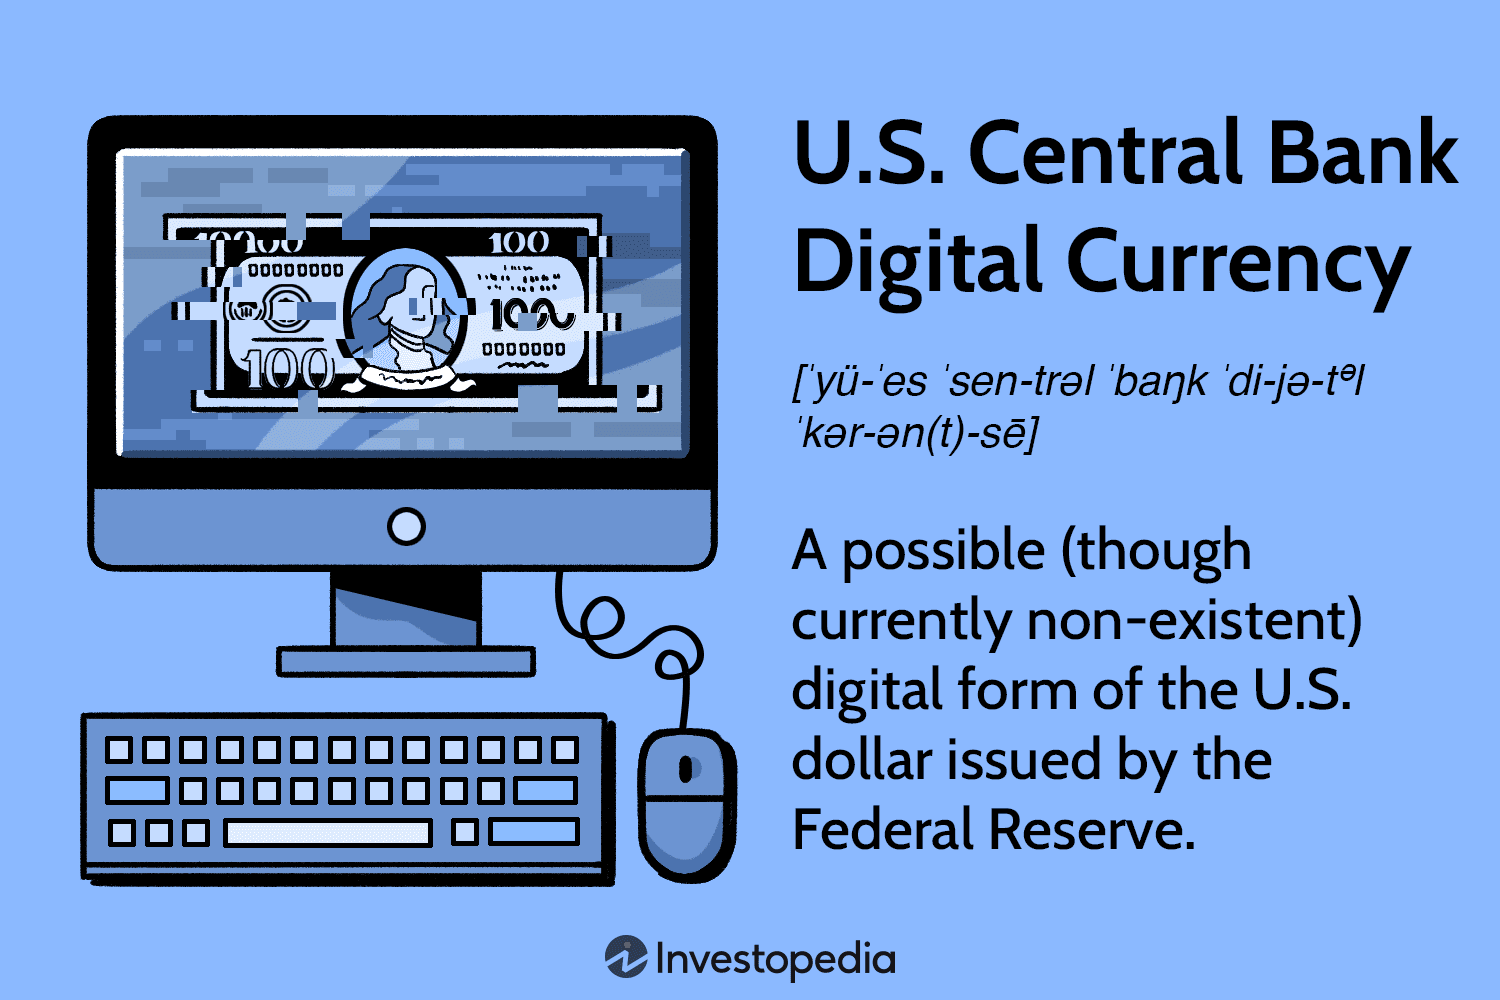 U.S. Central Bank Digital Currency